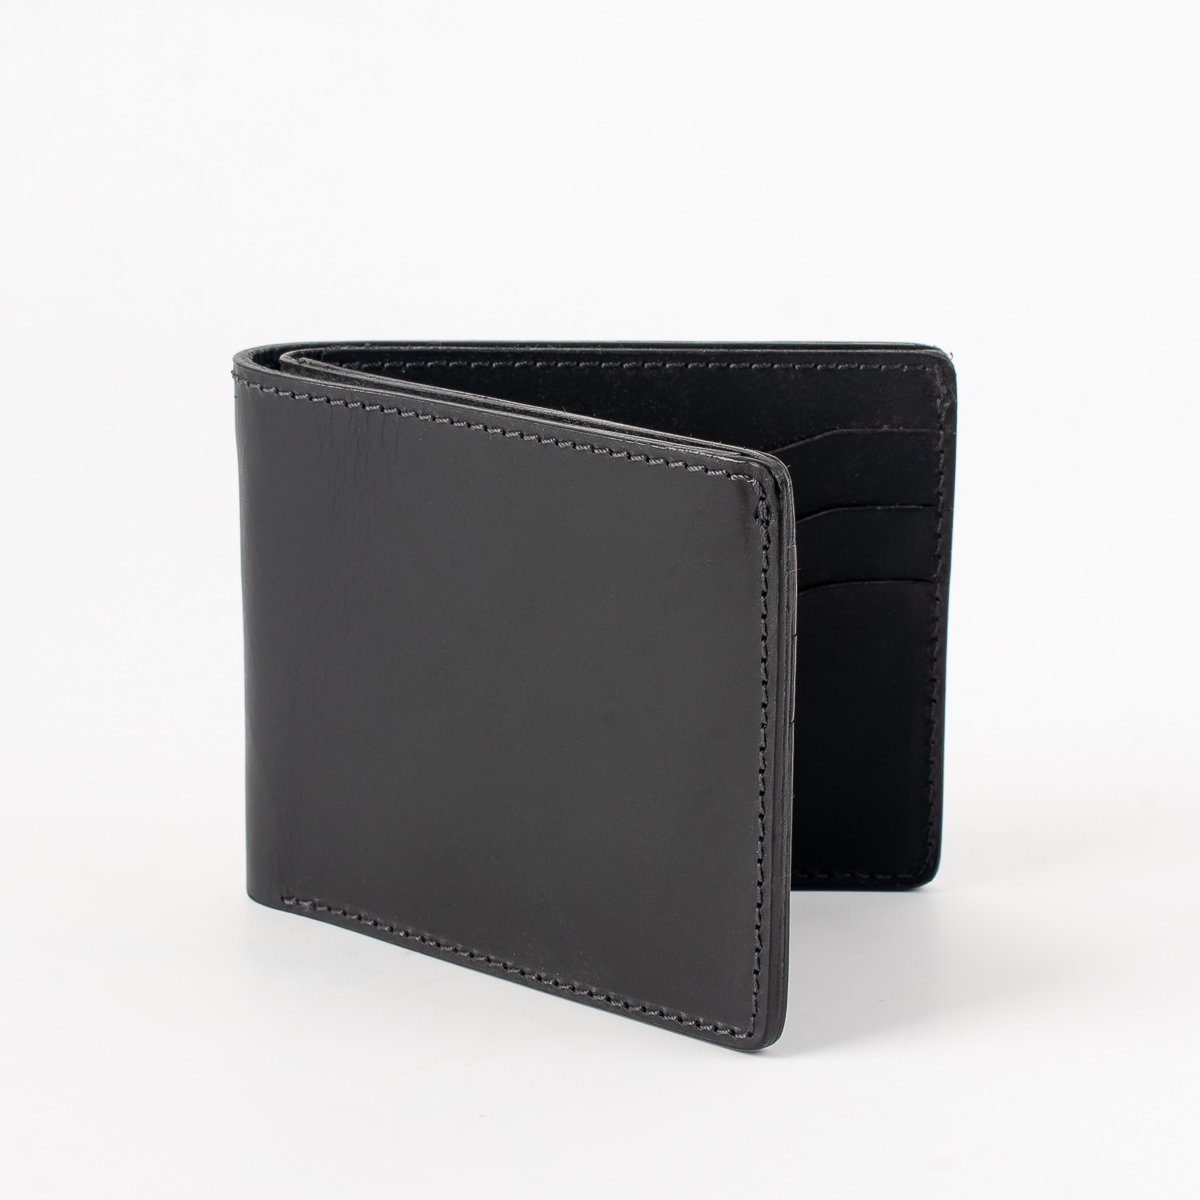 OGL-KINGSMAN-BF OGL Kingsman Classic Bi Fold Wallet - Black, Brown or Tan - 1